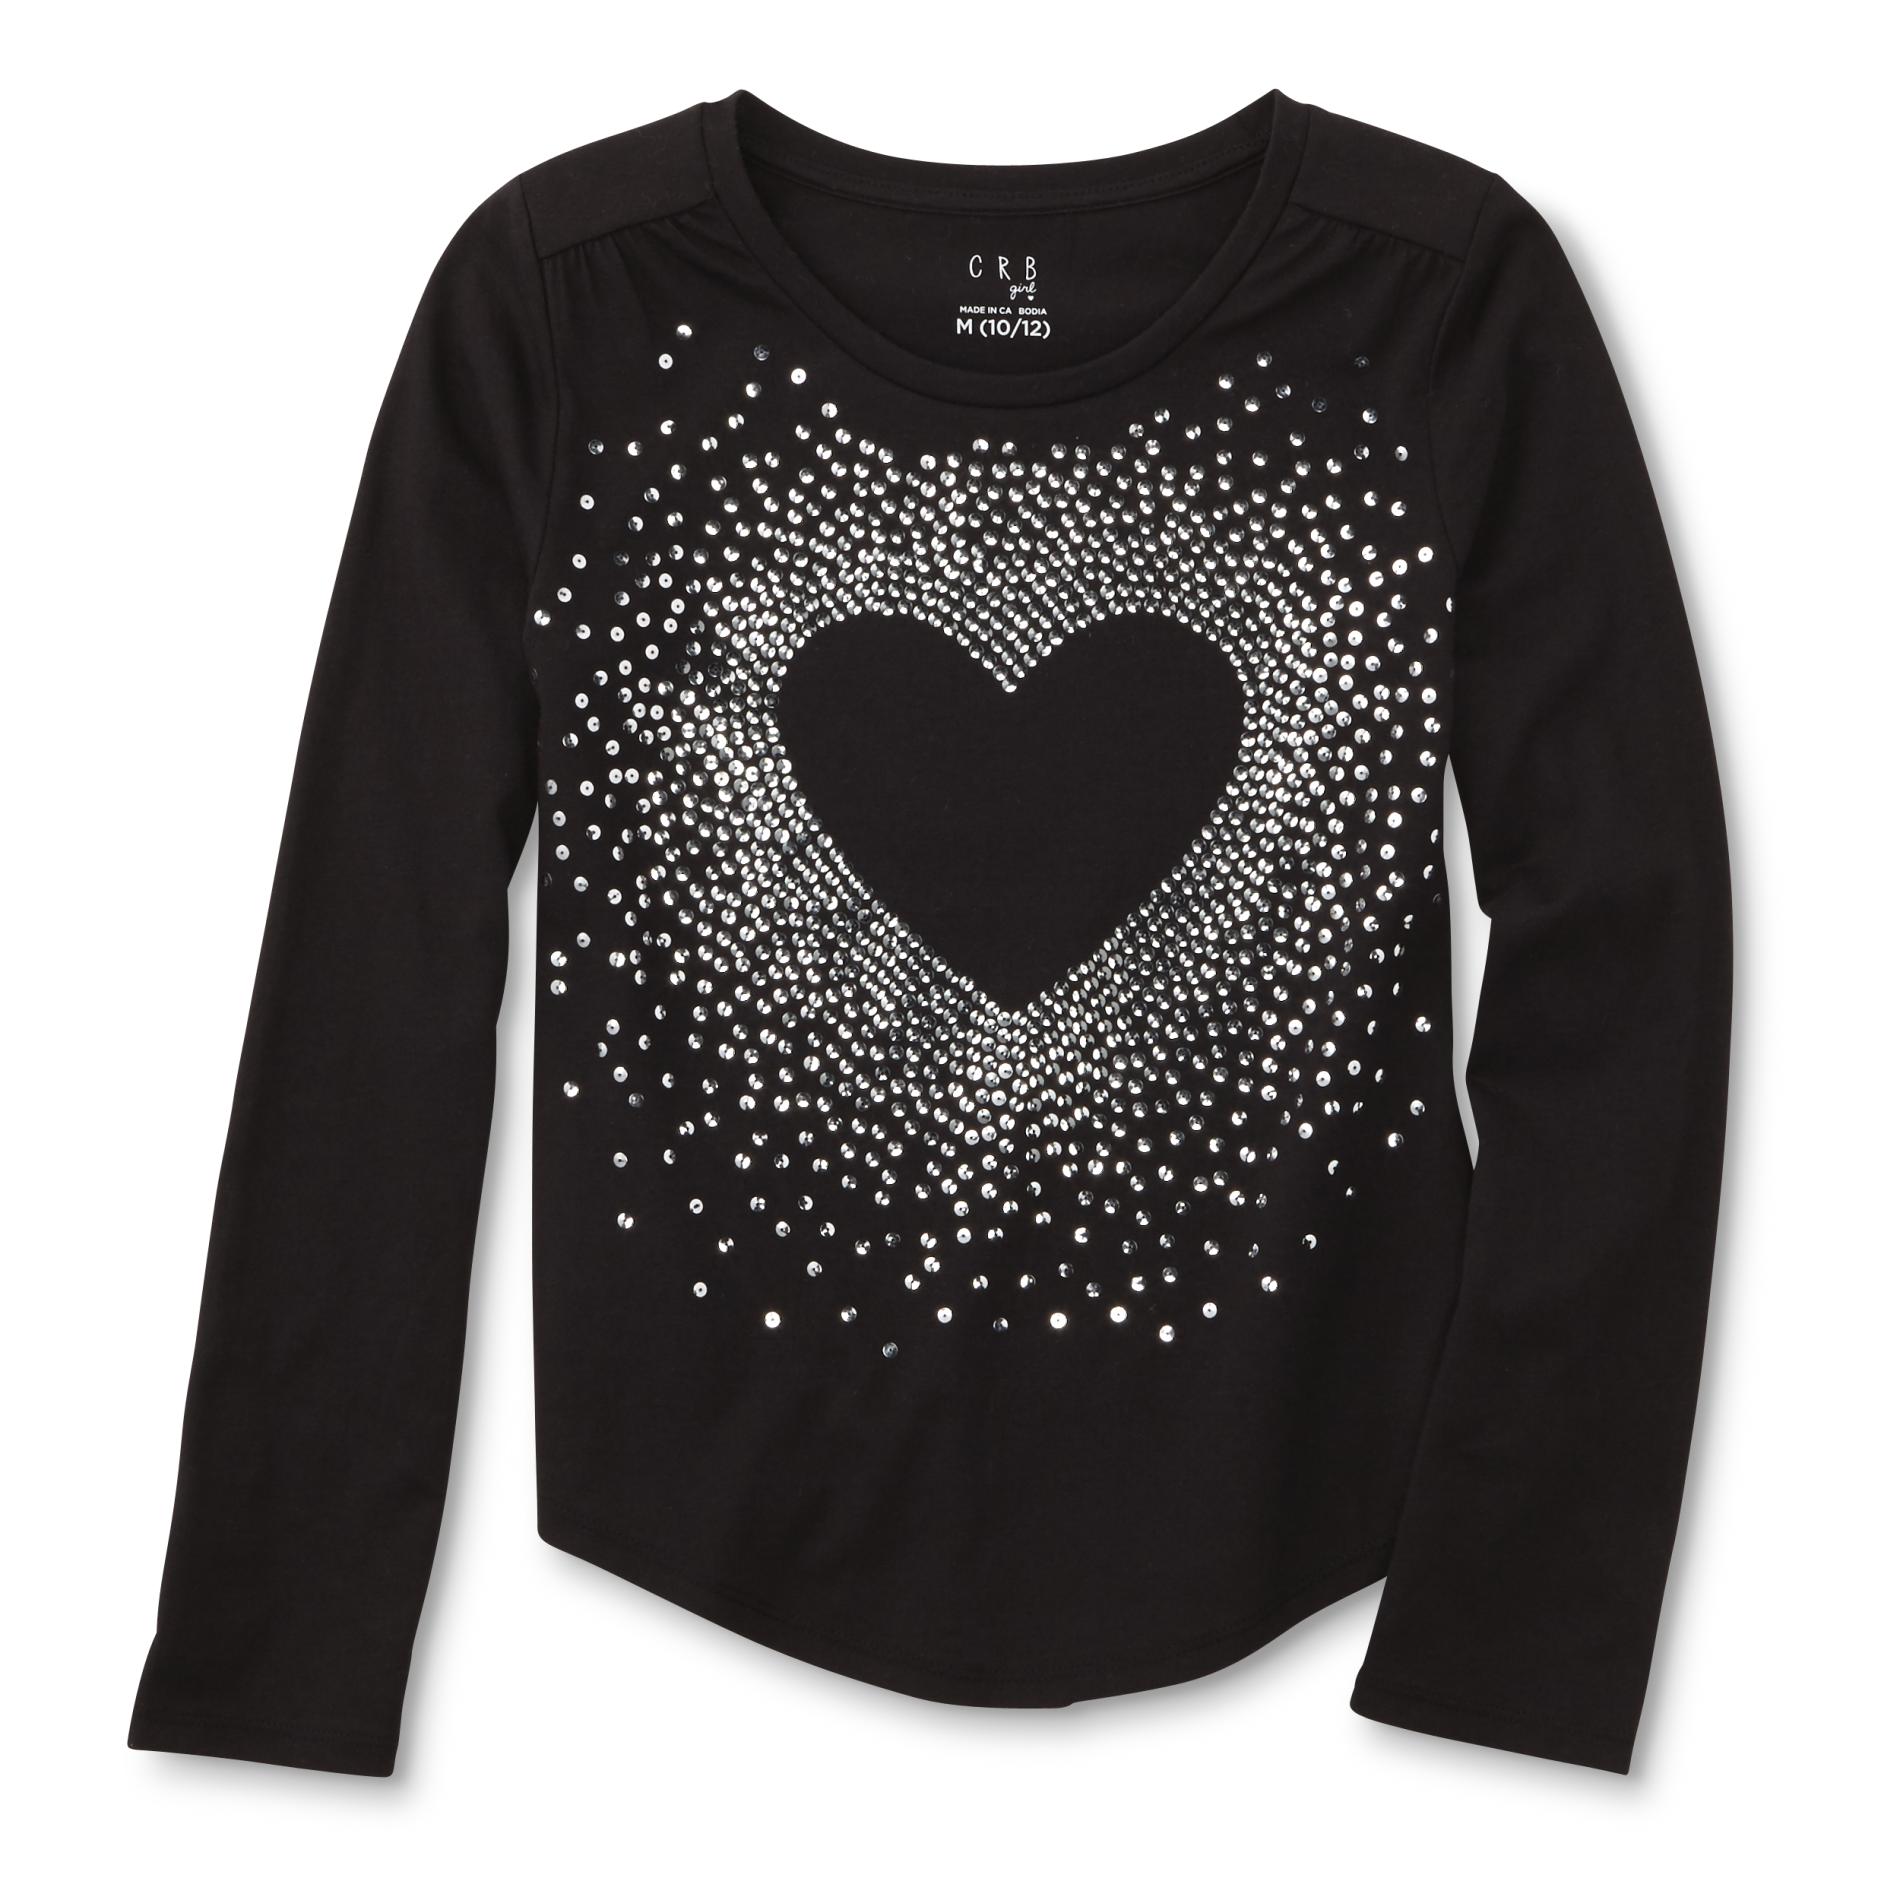 Canyon River Blues Girls' Embellished Shirt - Heart